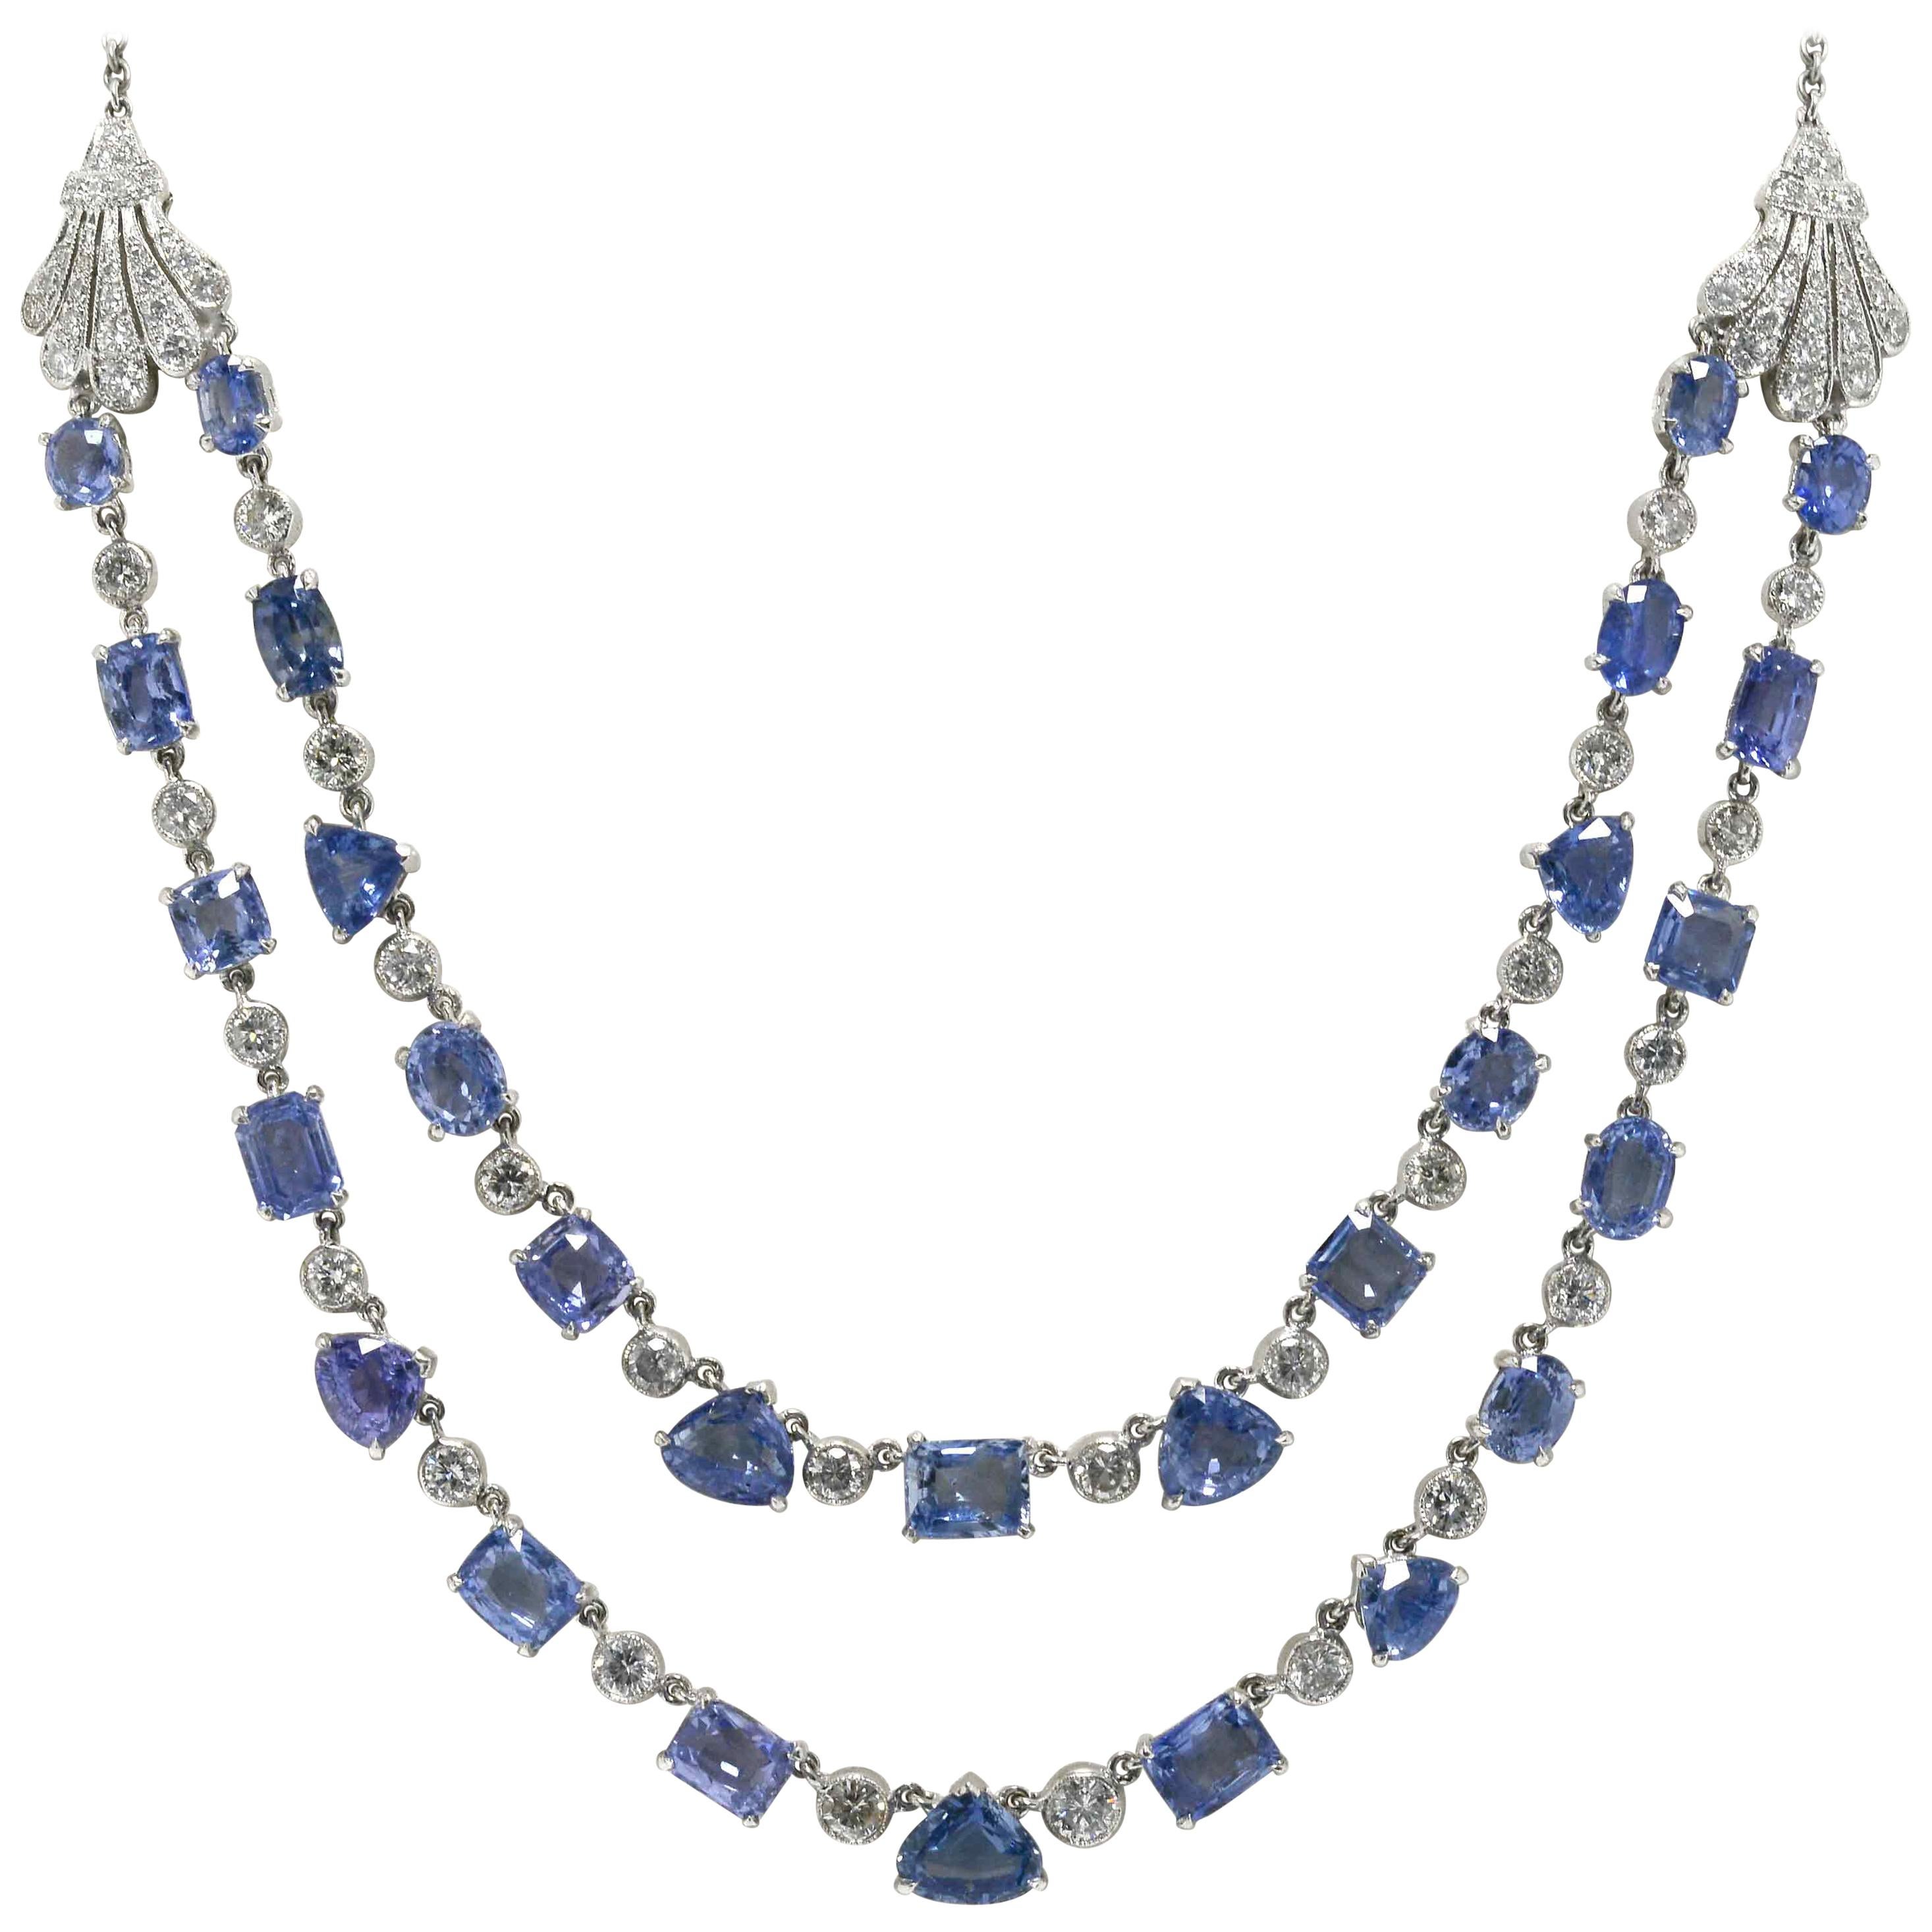 Art Deco Style 40 Carat Certified Natural Blue Sapphire Diamond Bib Necklace